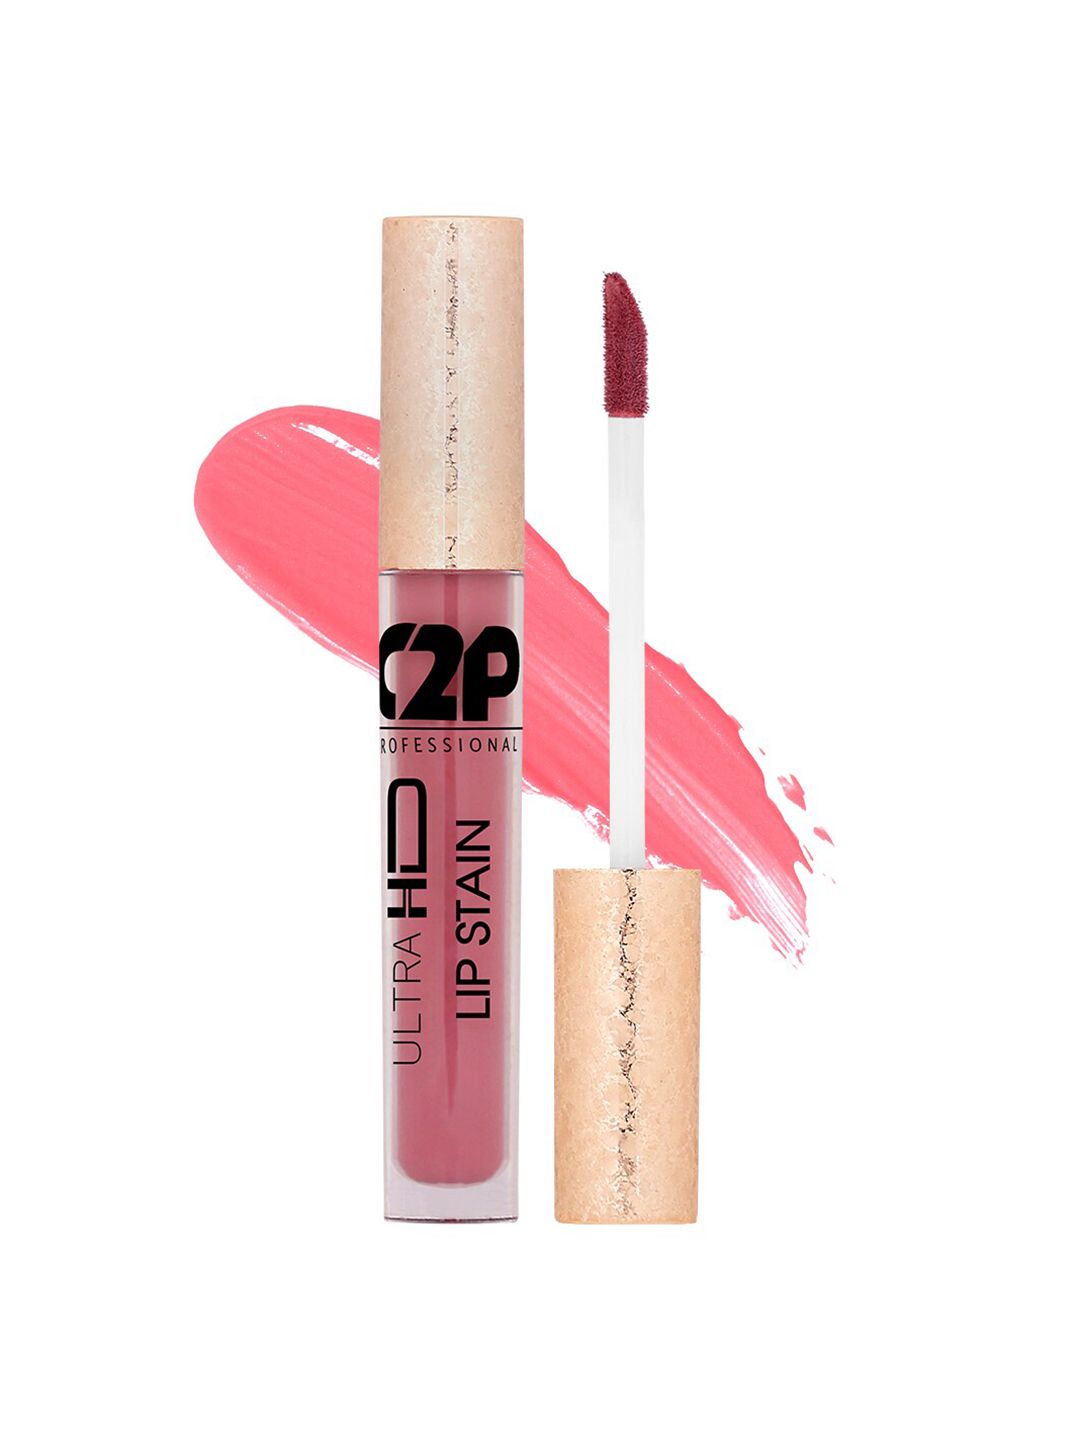 C2P PROFESSIONAL MAKEUP Lip Stain Liquid Lipstick - Meadow Finn 32 5 ml Price in India